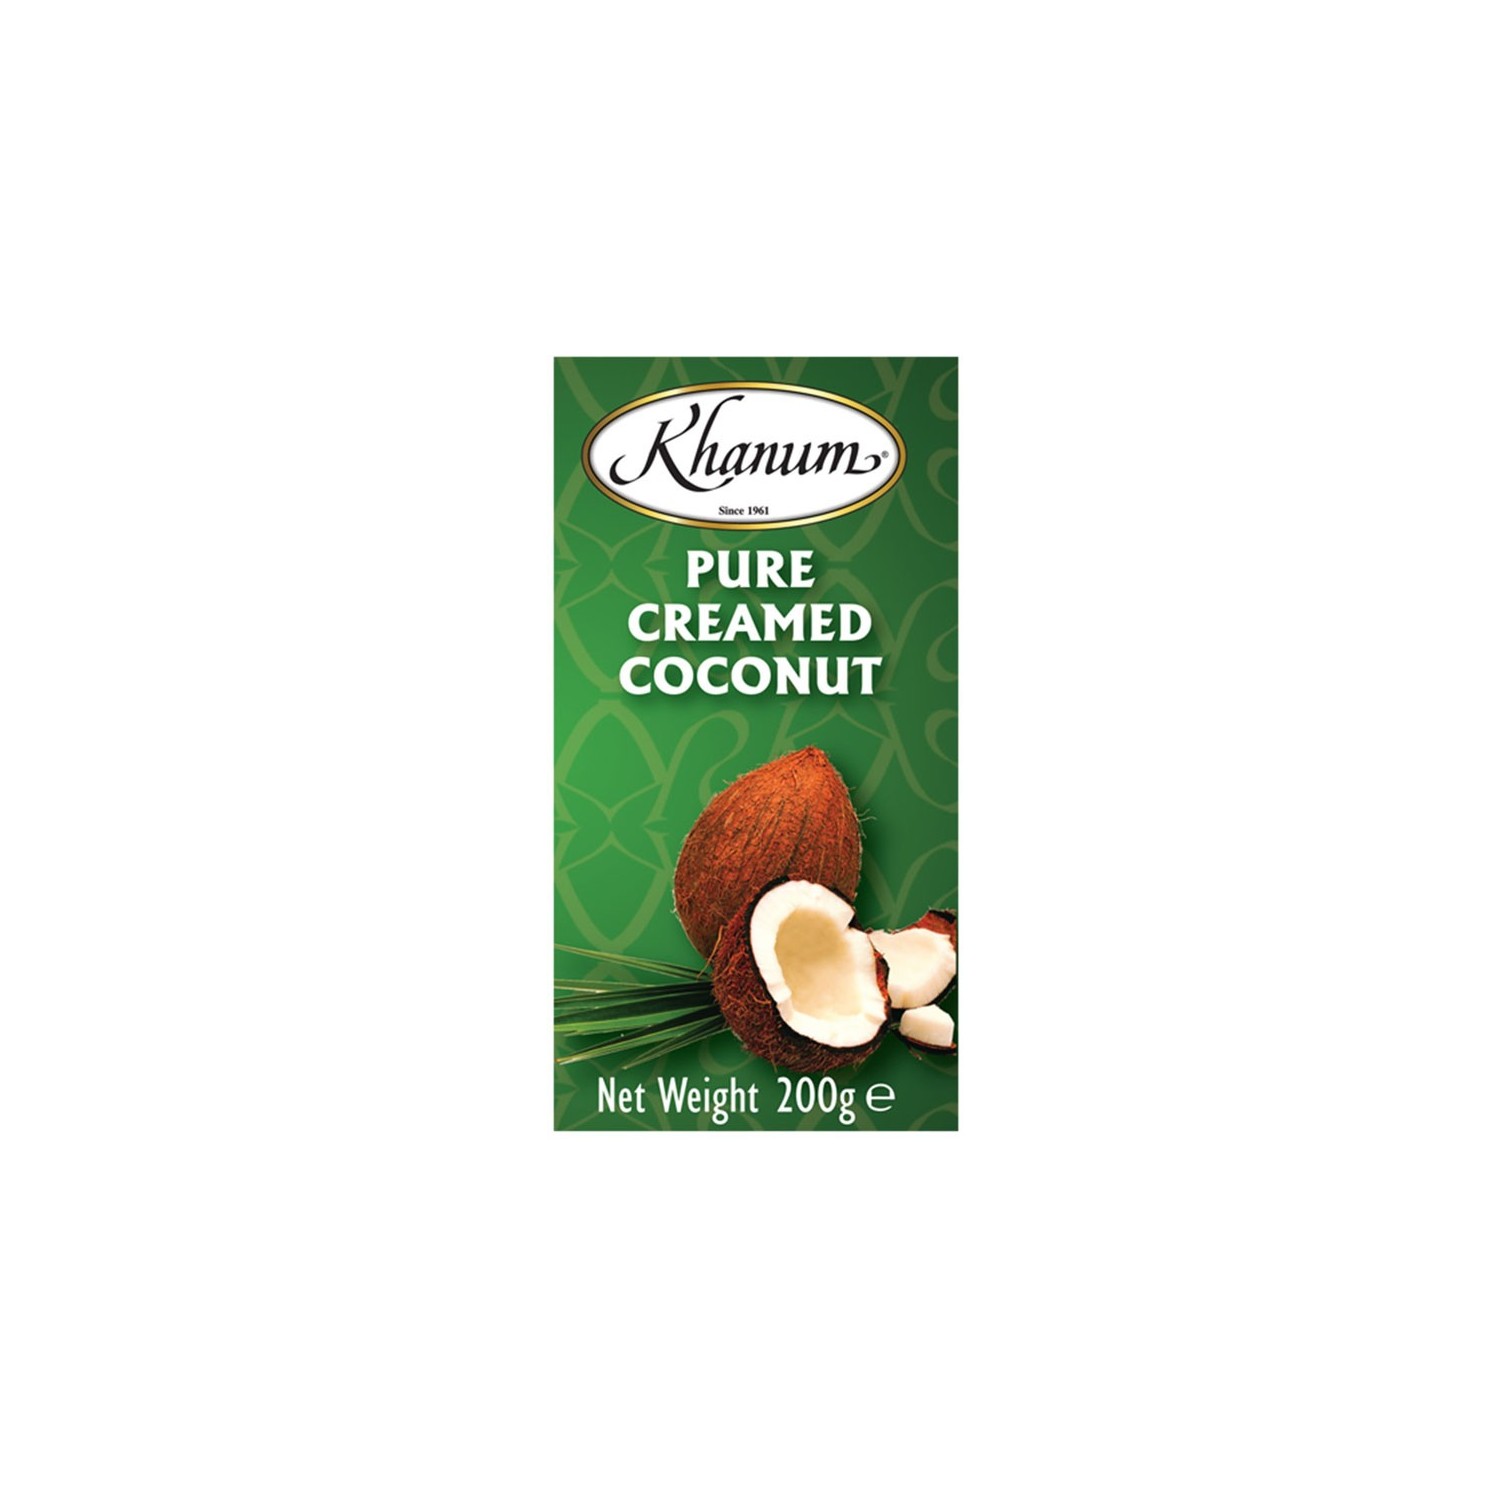 Khanum 200g Pure Creamed Coconut